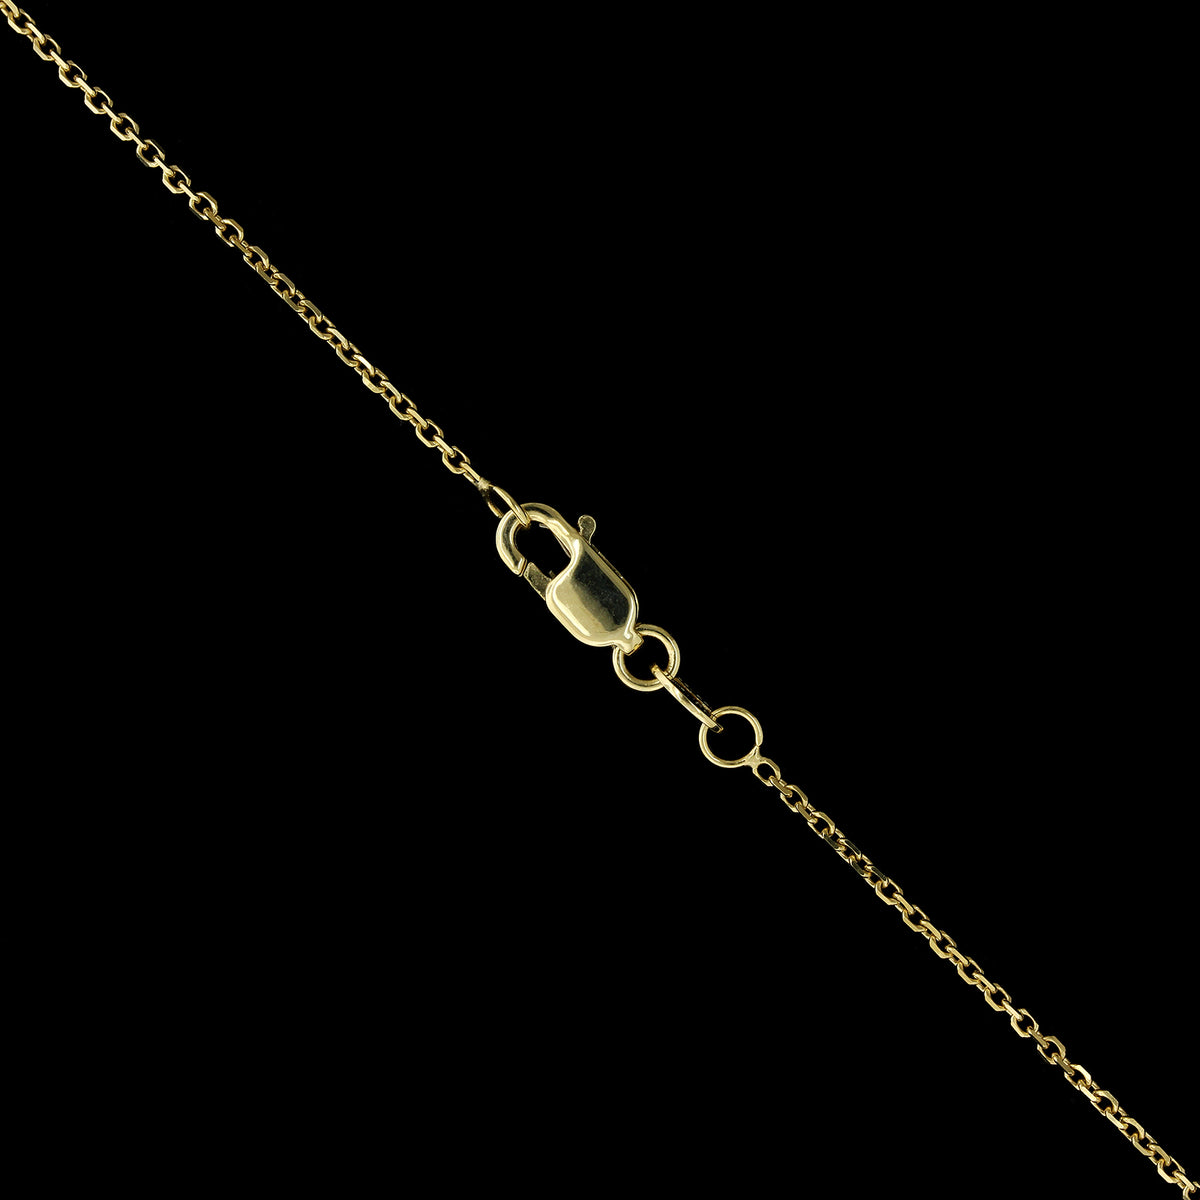 14K Yellow Gold Estate Diamond Pendant Necklace